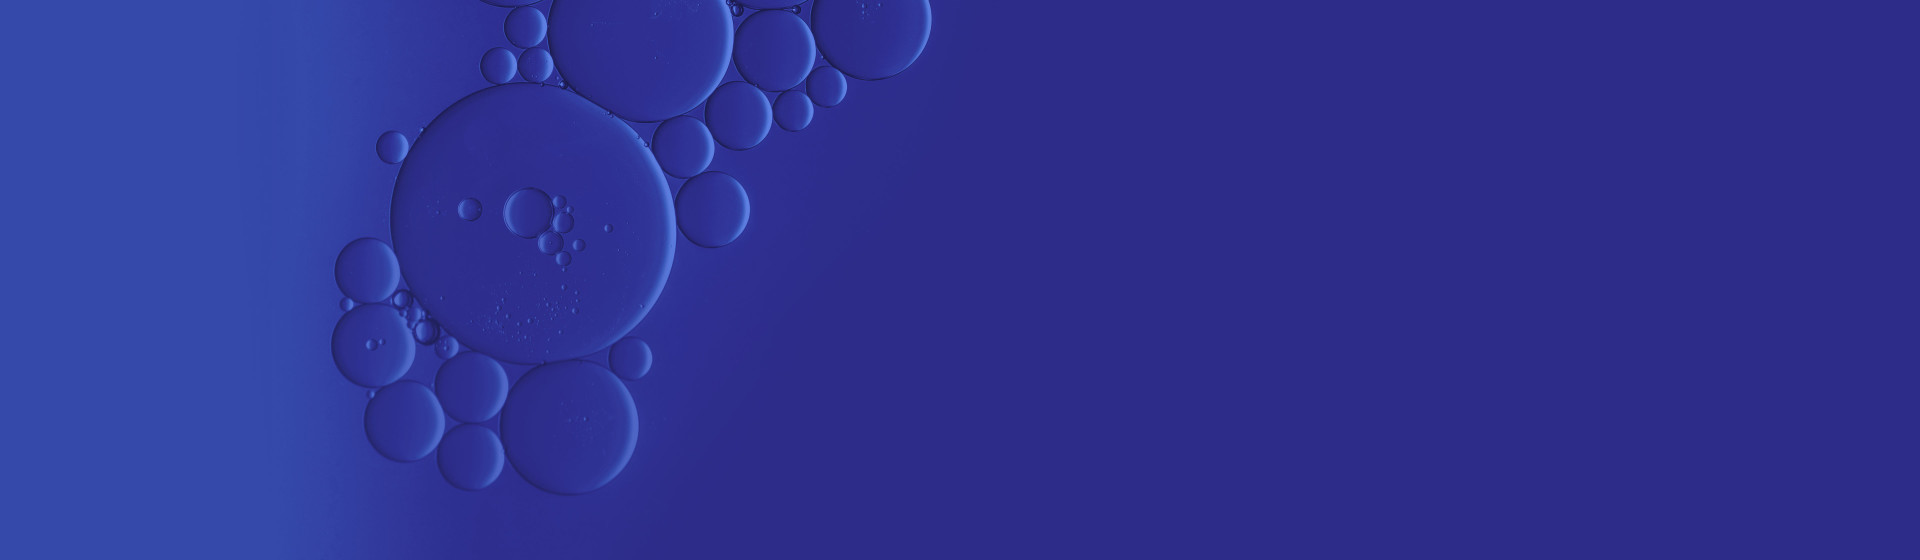 Blue bubbles on a blue background.